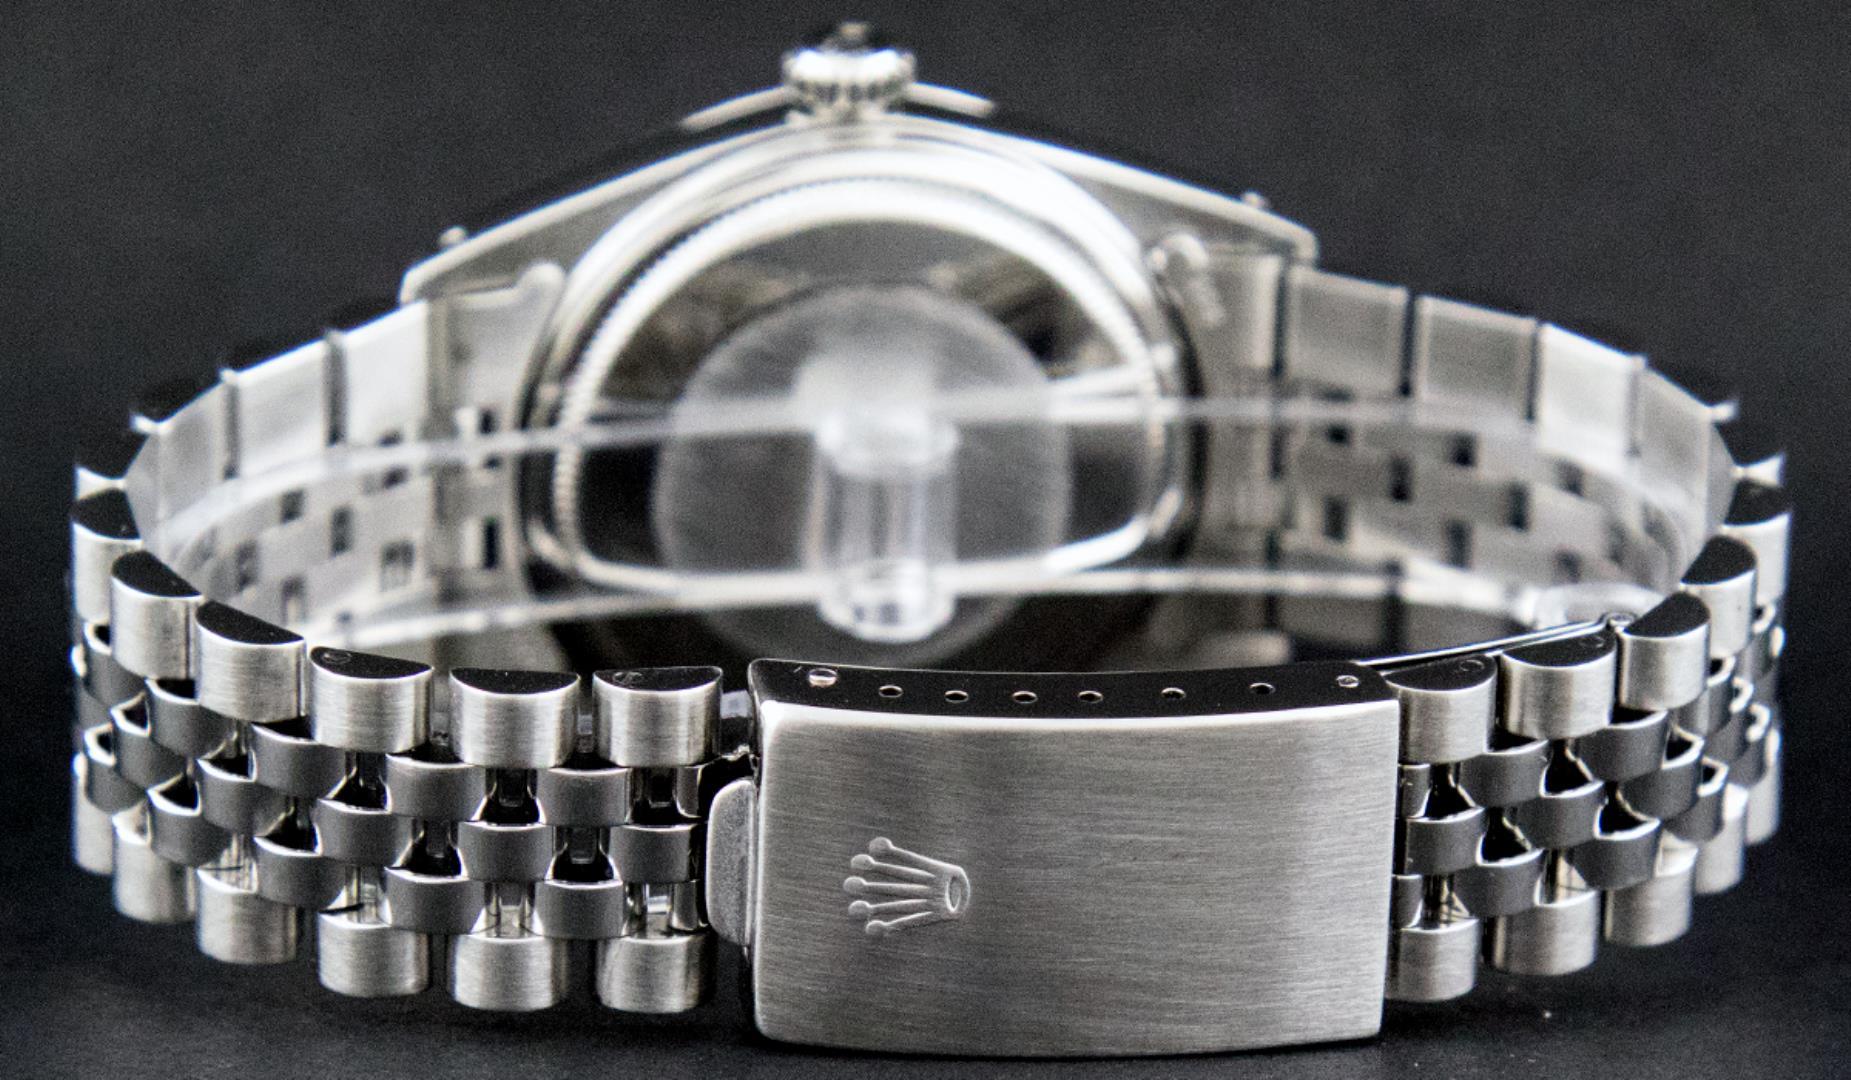 Rolex Mens Stainless Steel Blue Vignette Sapphire and Diamond Datejust Wristwatch